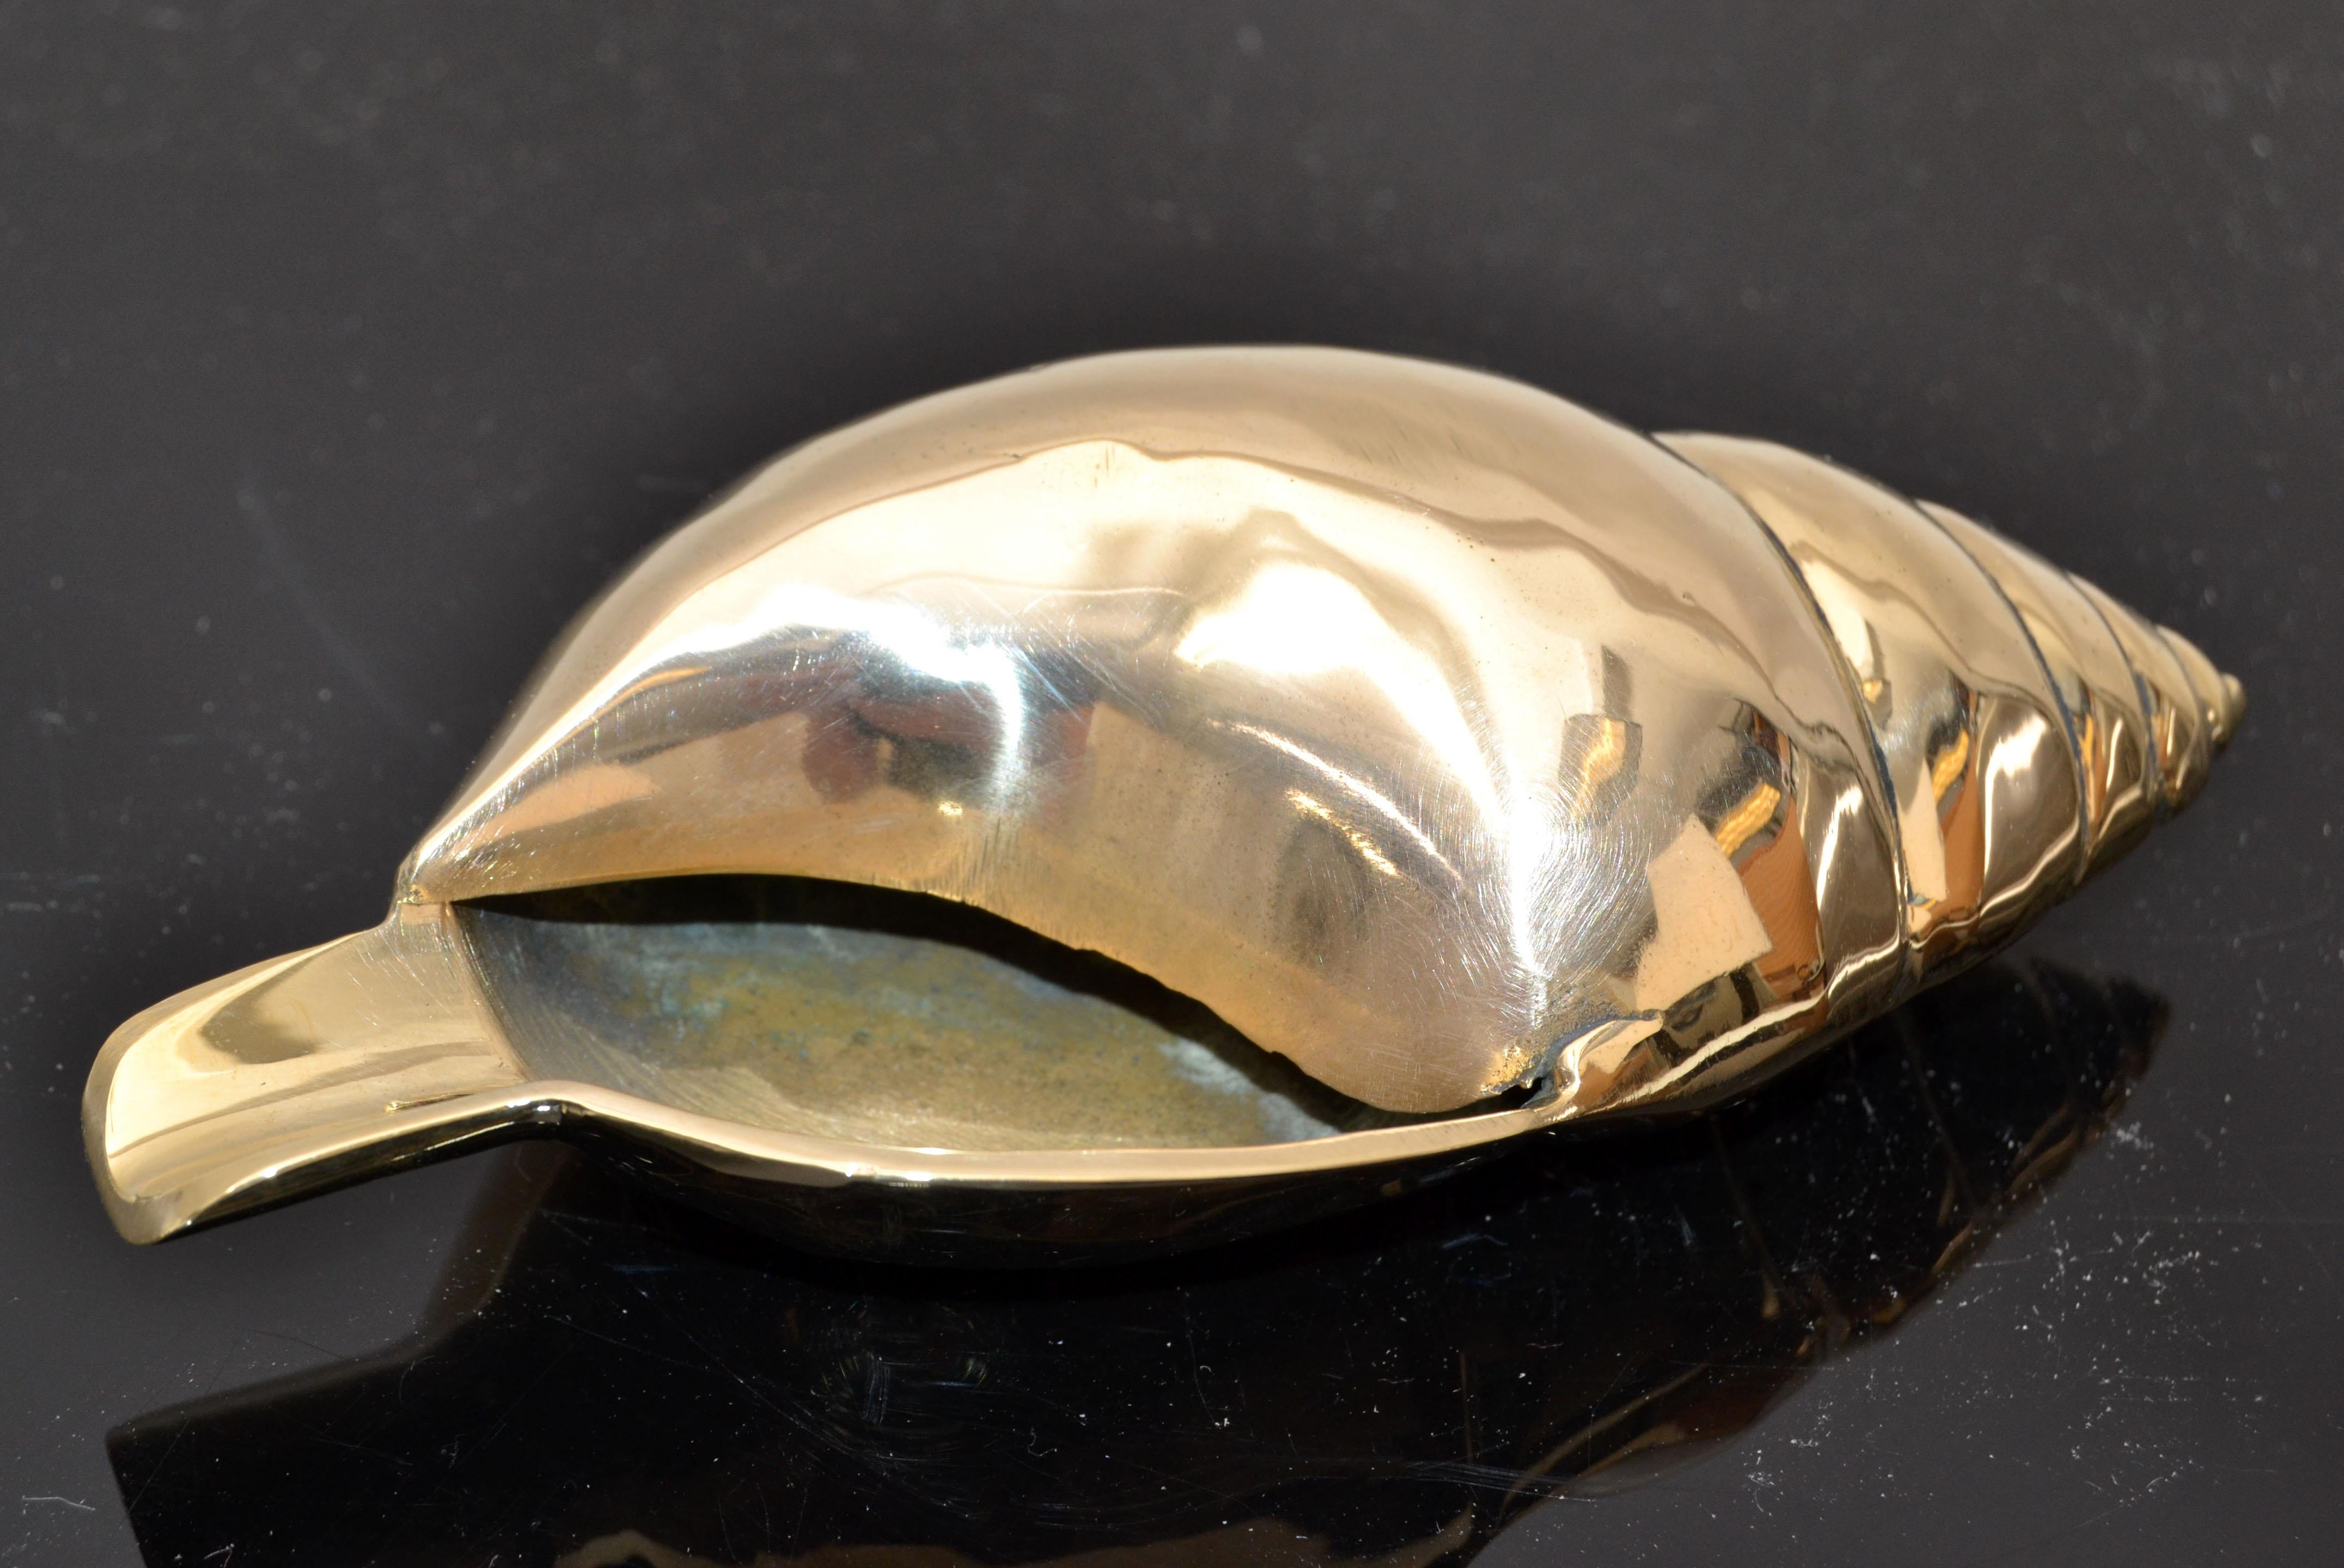 Mid-Century Modern Nautical polished brass ashtray seashell sculpture.
Coastal Tabacco Accessories all handmade.
 